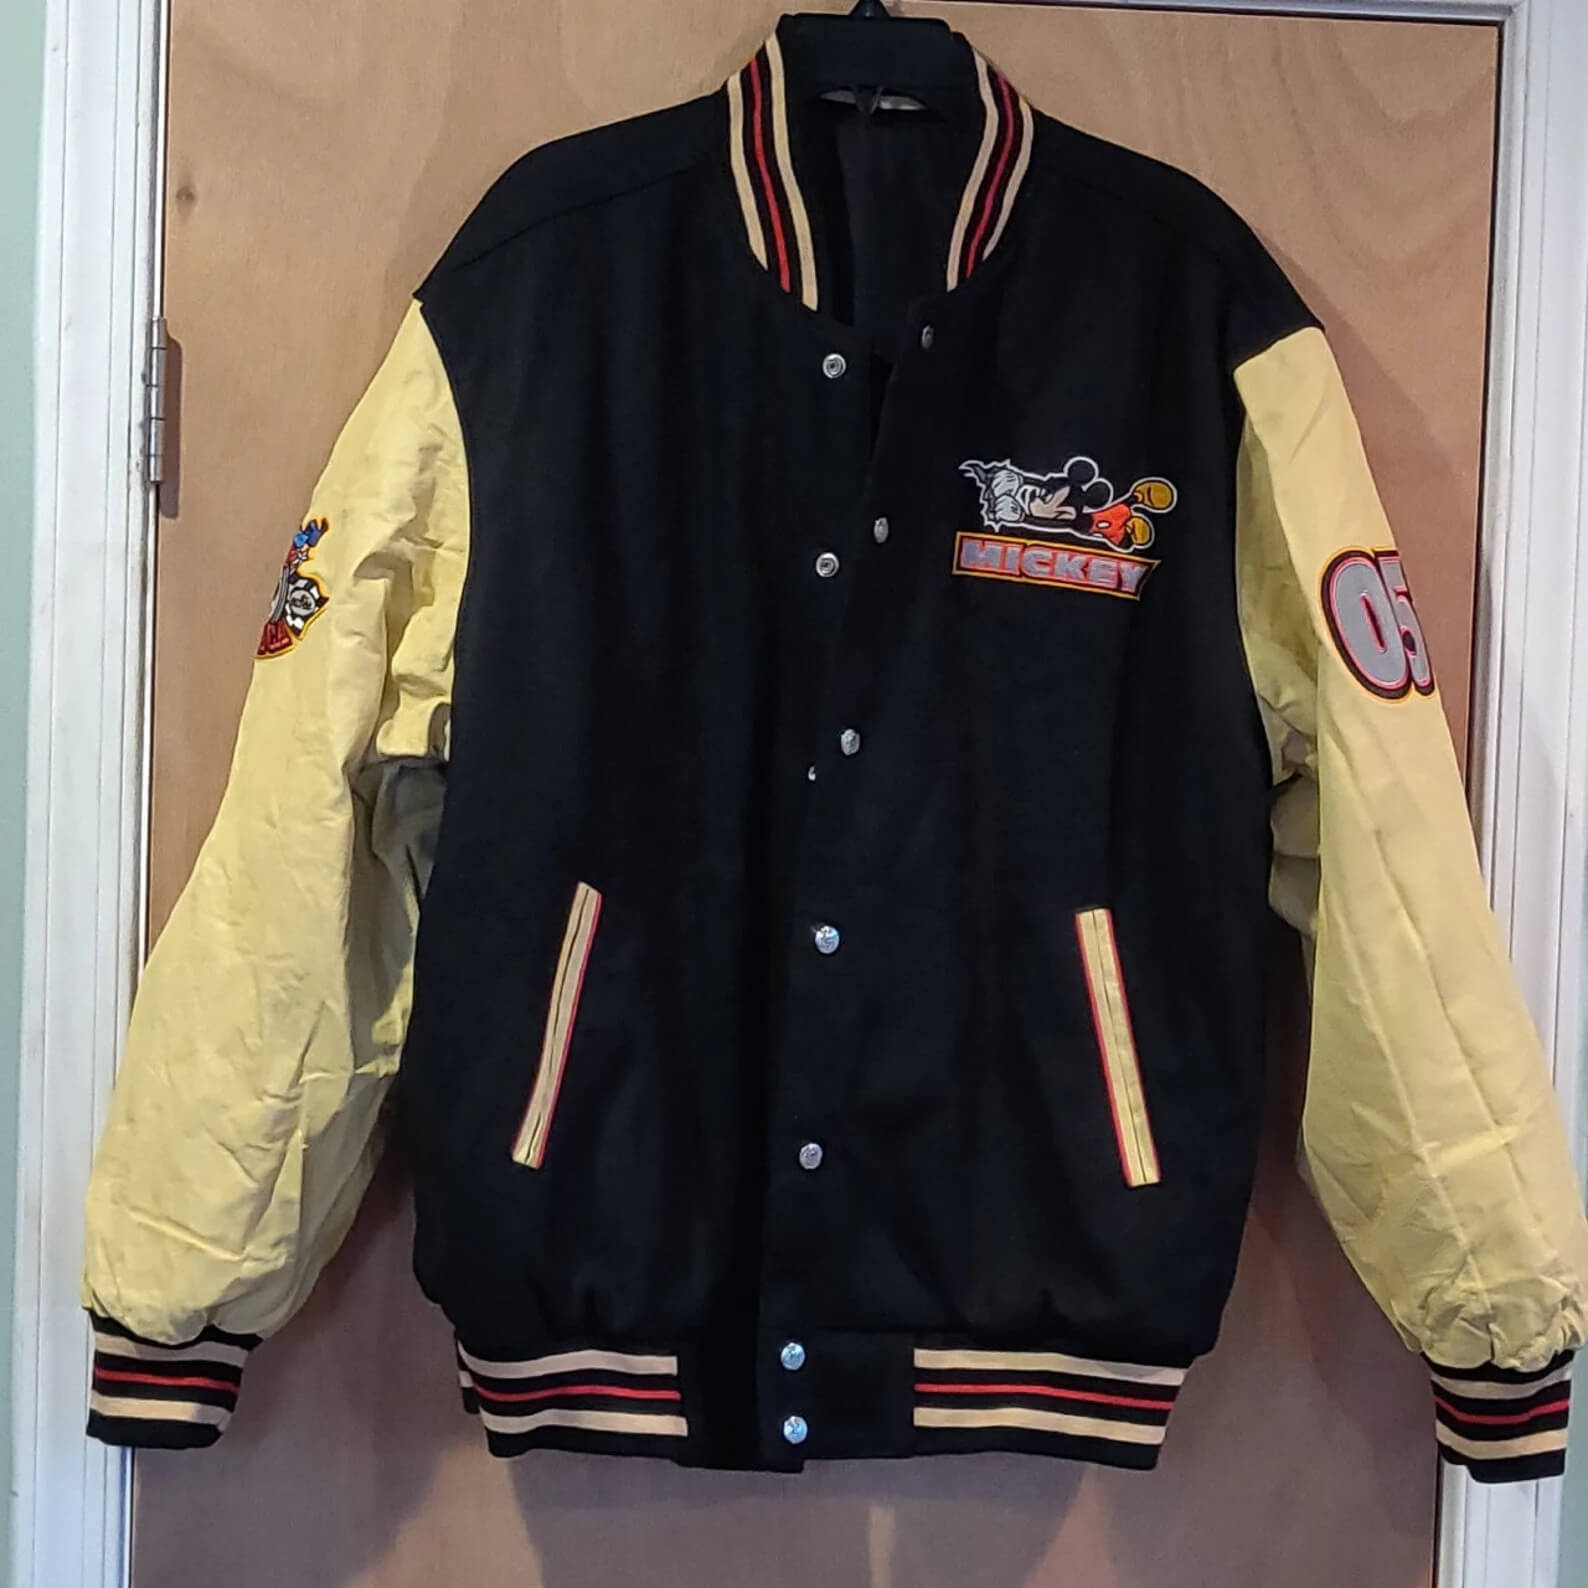 Mickey Mouse Racing Across America Varsity Jacket - Maker of Jacket